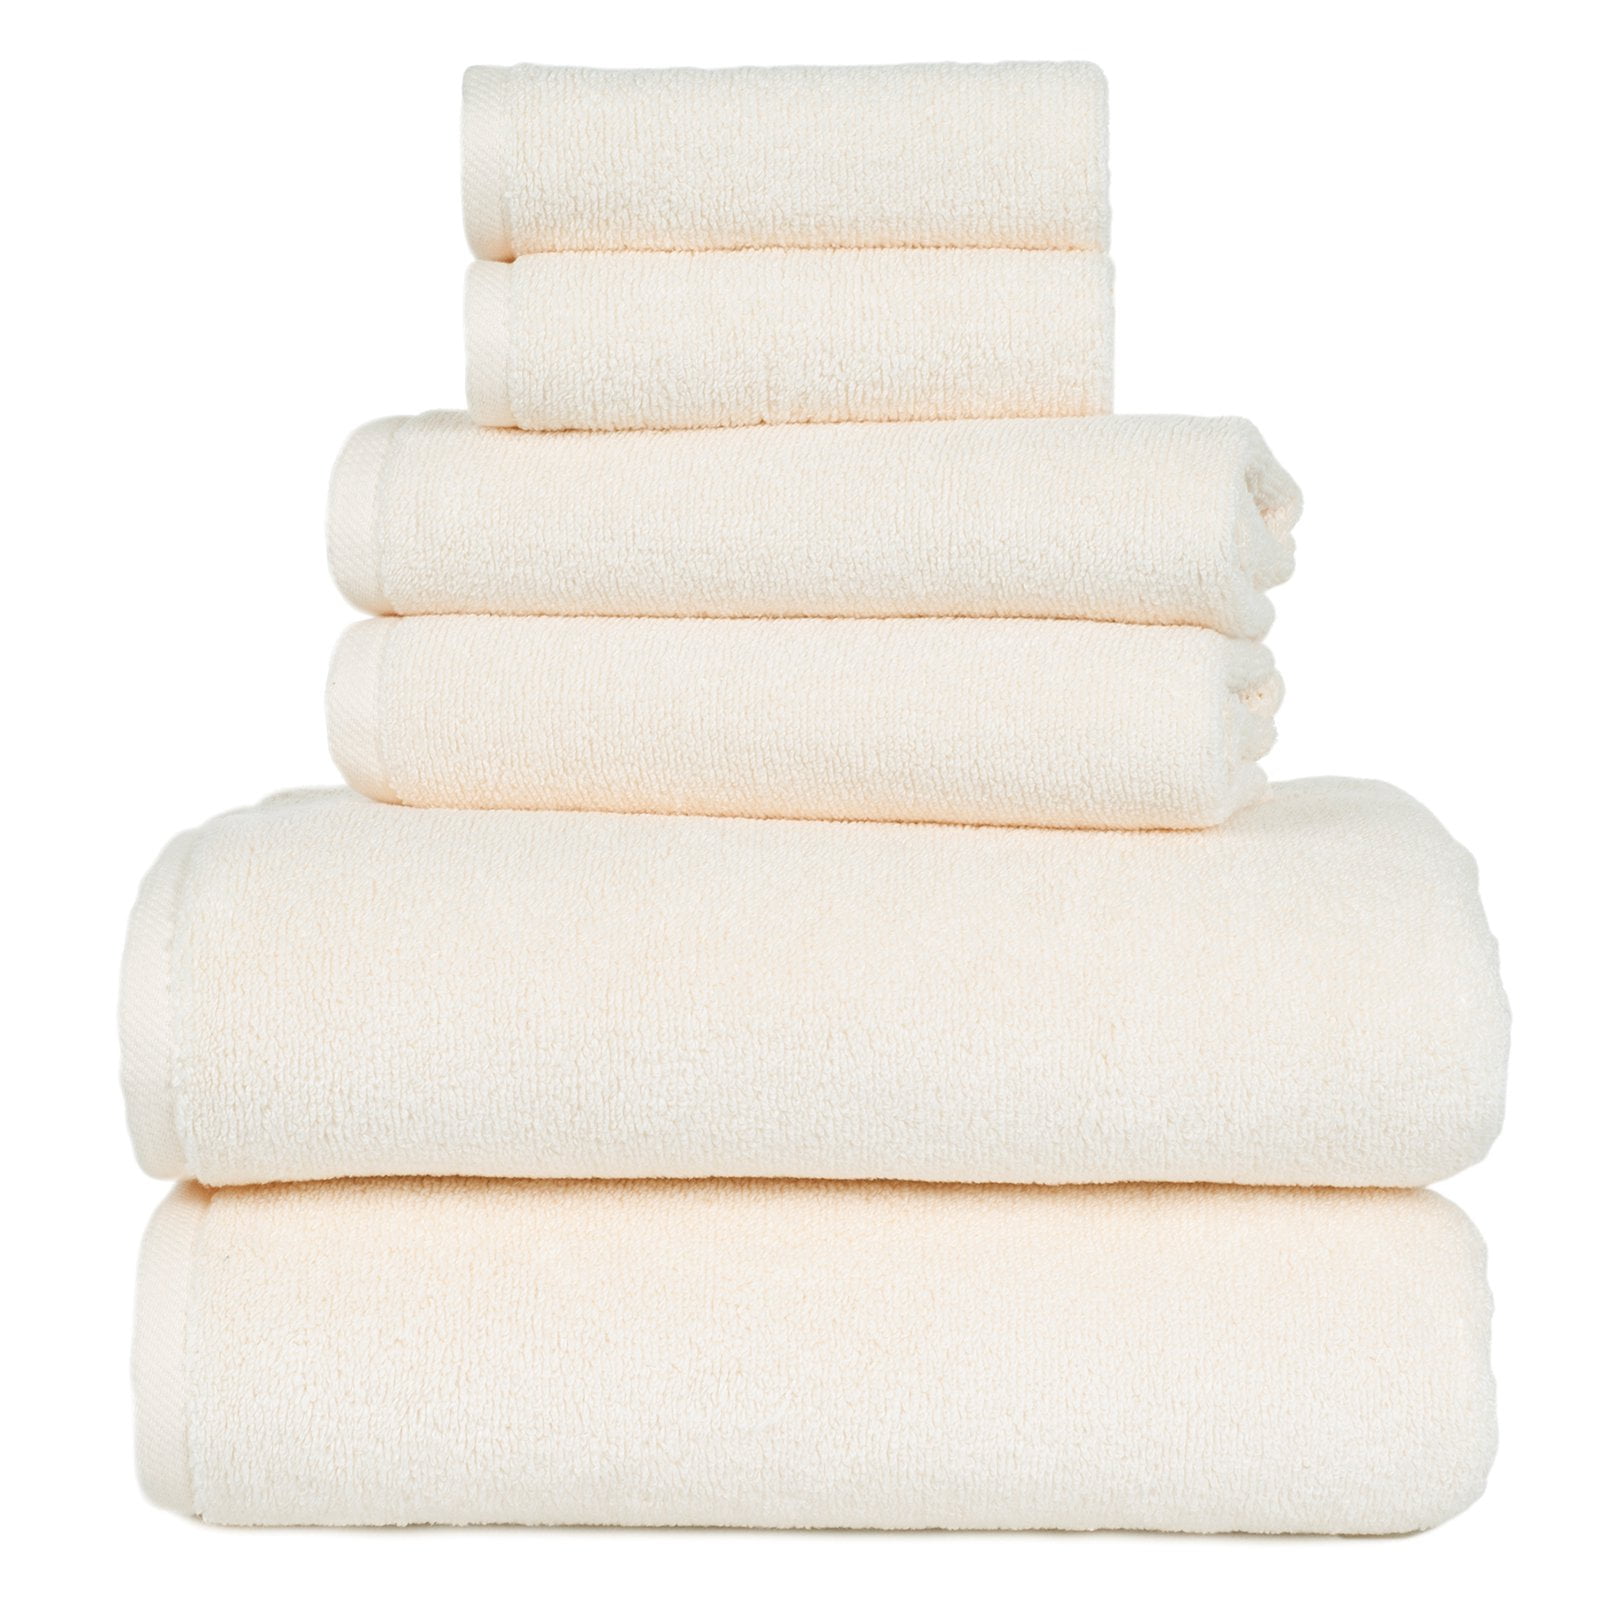 Pair of 100% Cotton Ochre Jumbo Bath Sheets RRP £32.49 